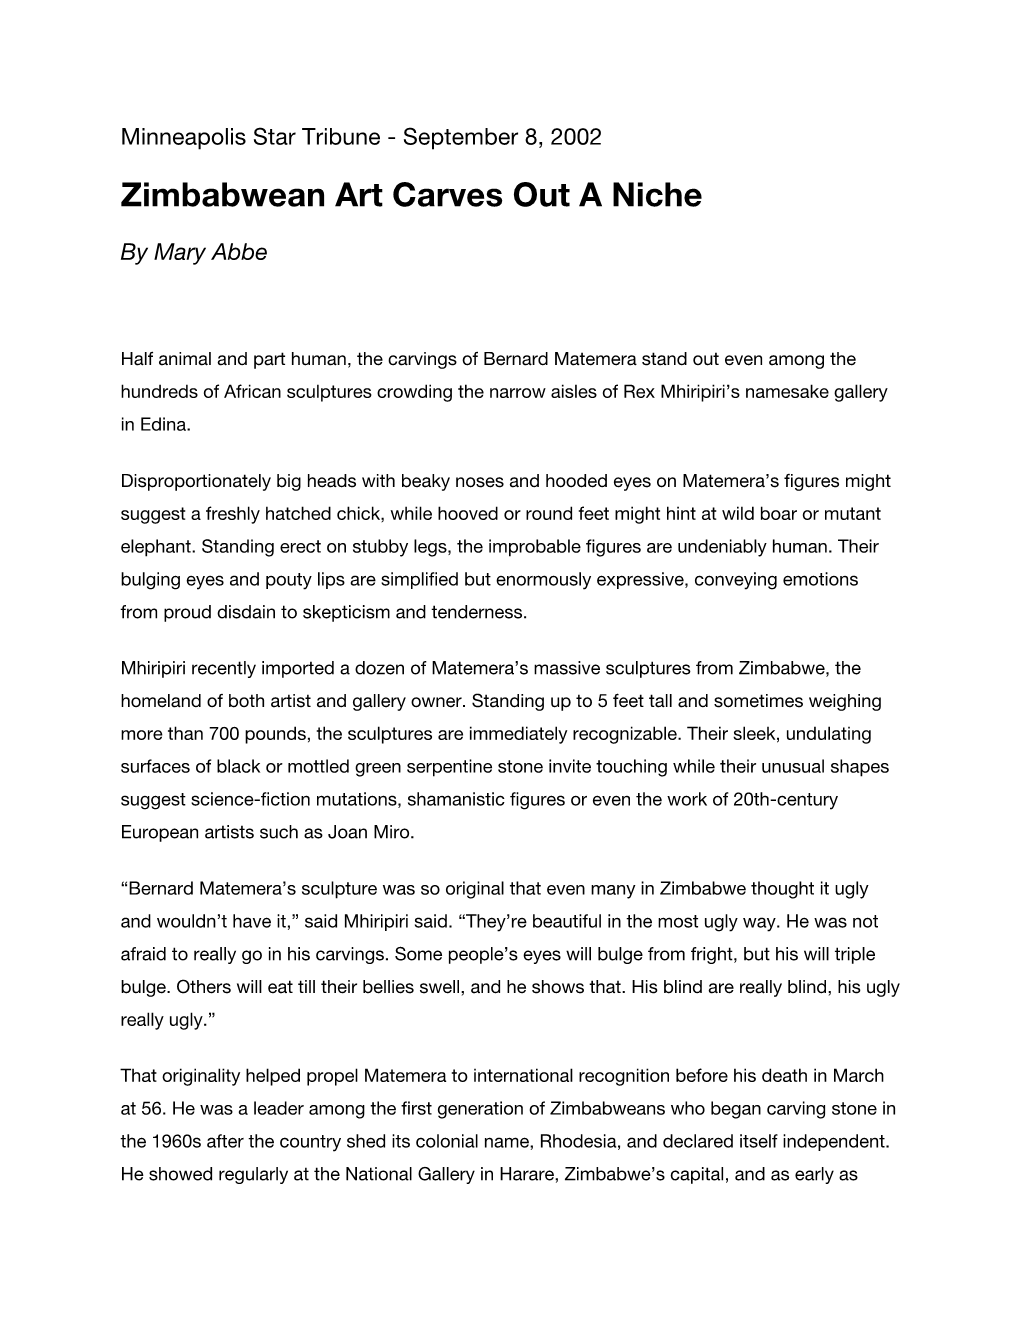 Zimbabwean Art Carves out a Niche